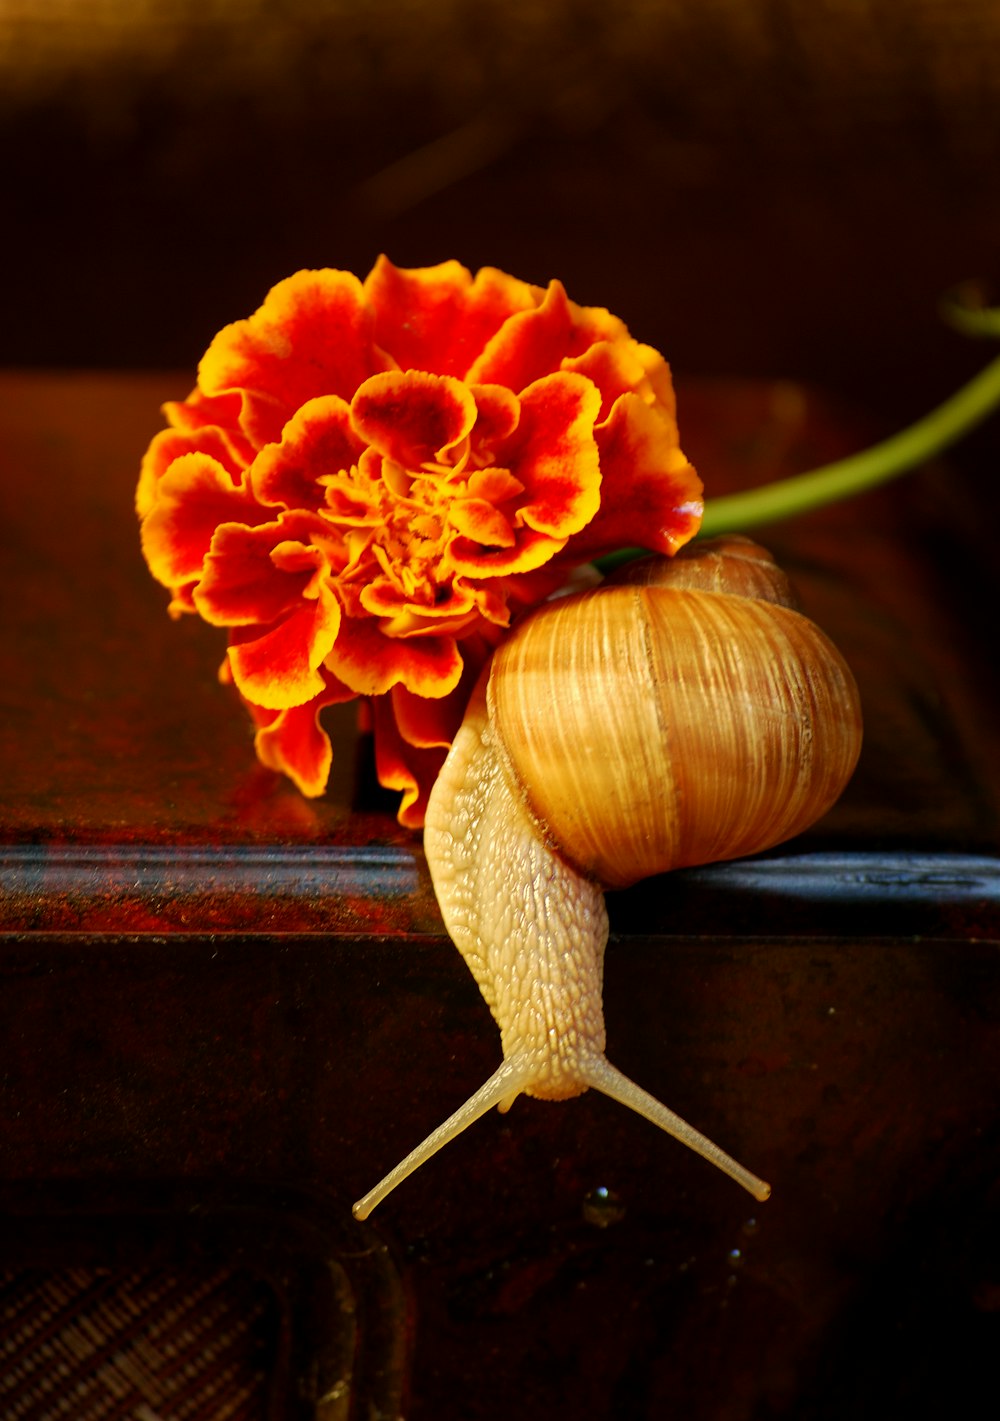 red flower beside brown snail